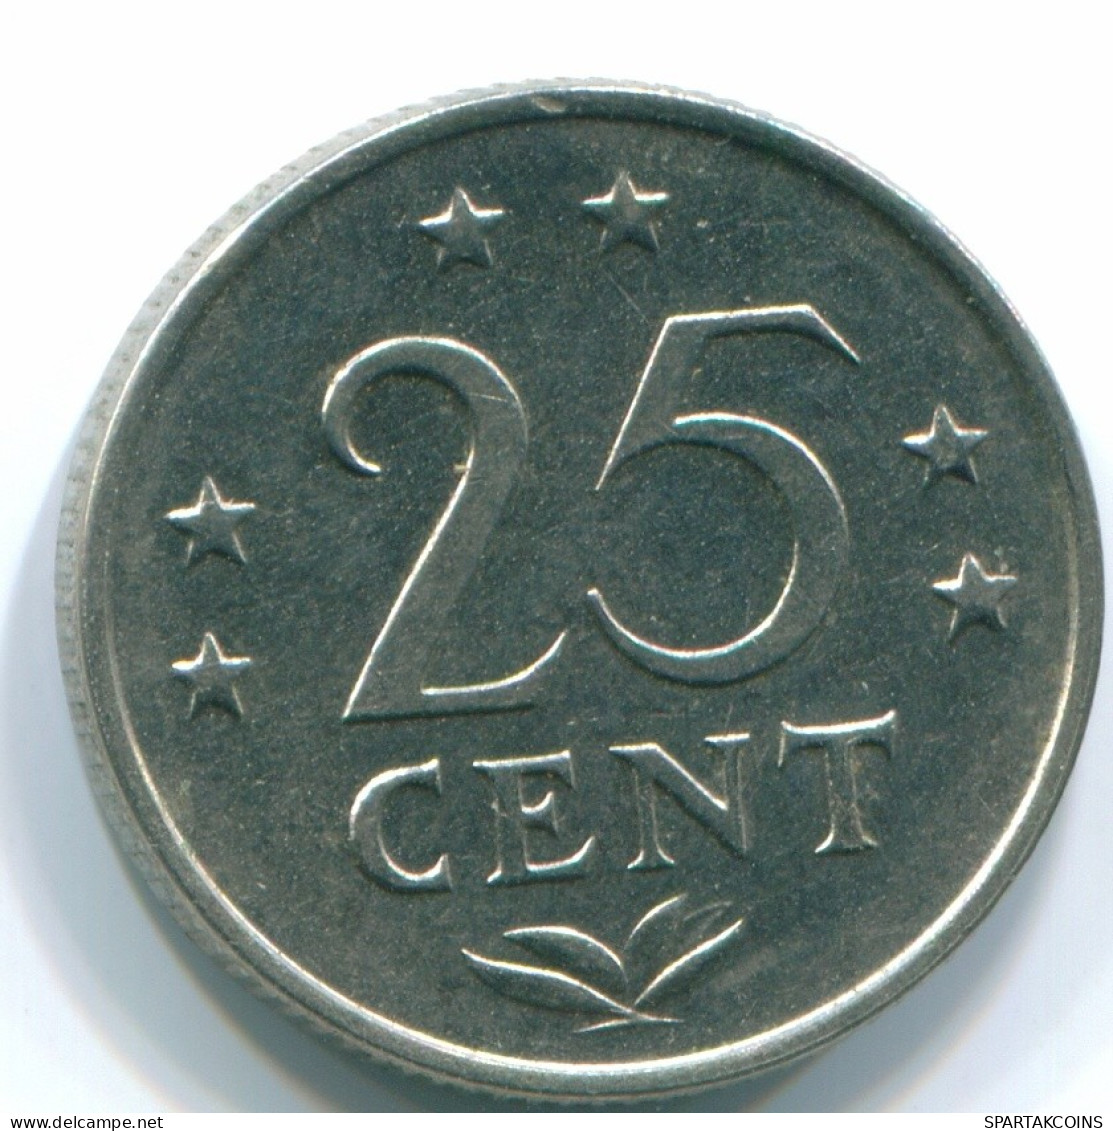 25 CENTS 1971 NETHERLANDS ANTILLES Nickel Colonial Coin #S11556.U.A - Nederlandse Antillen